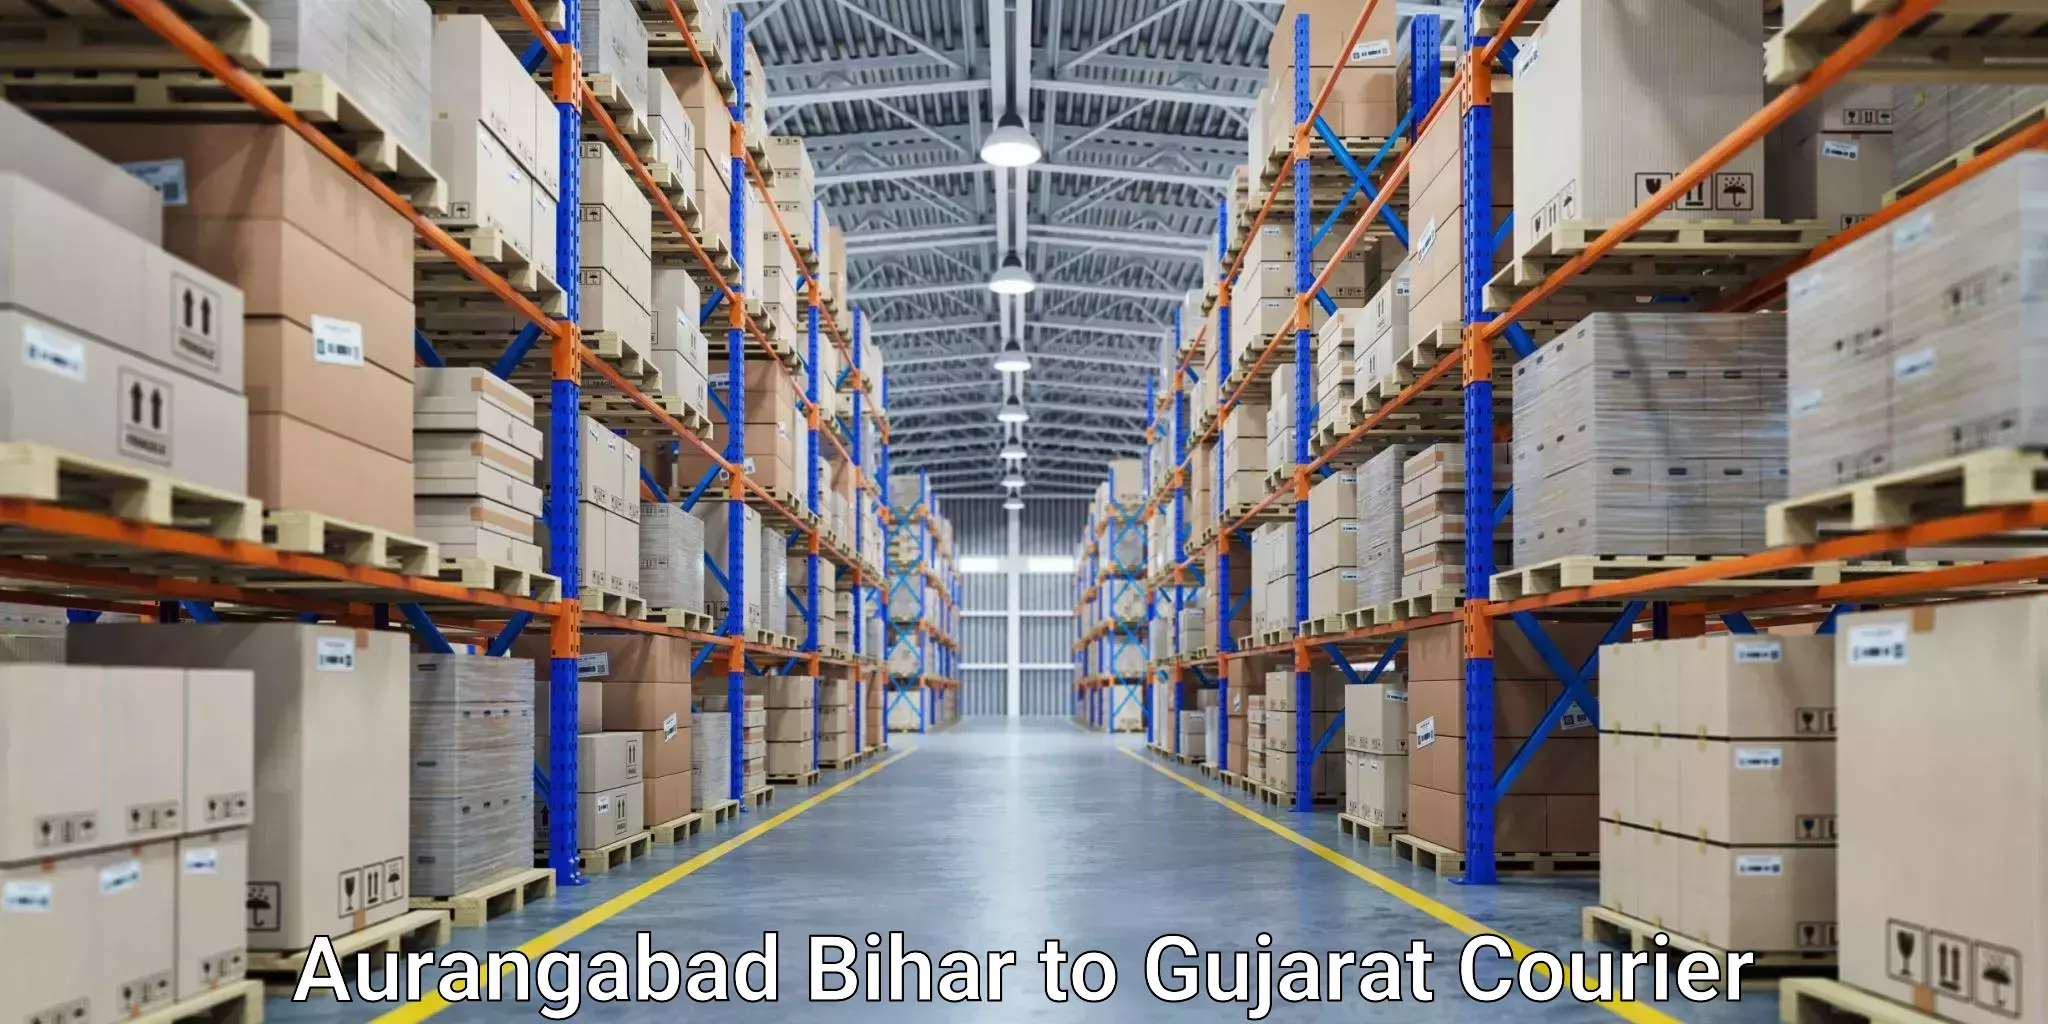 On-call courier service Aurangabad Bihar to GIDC